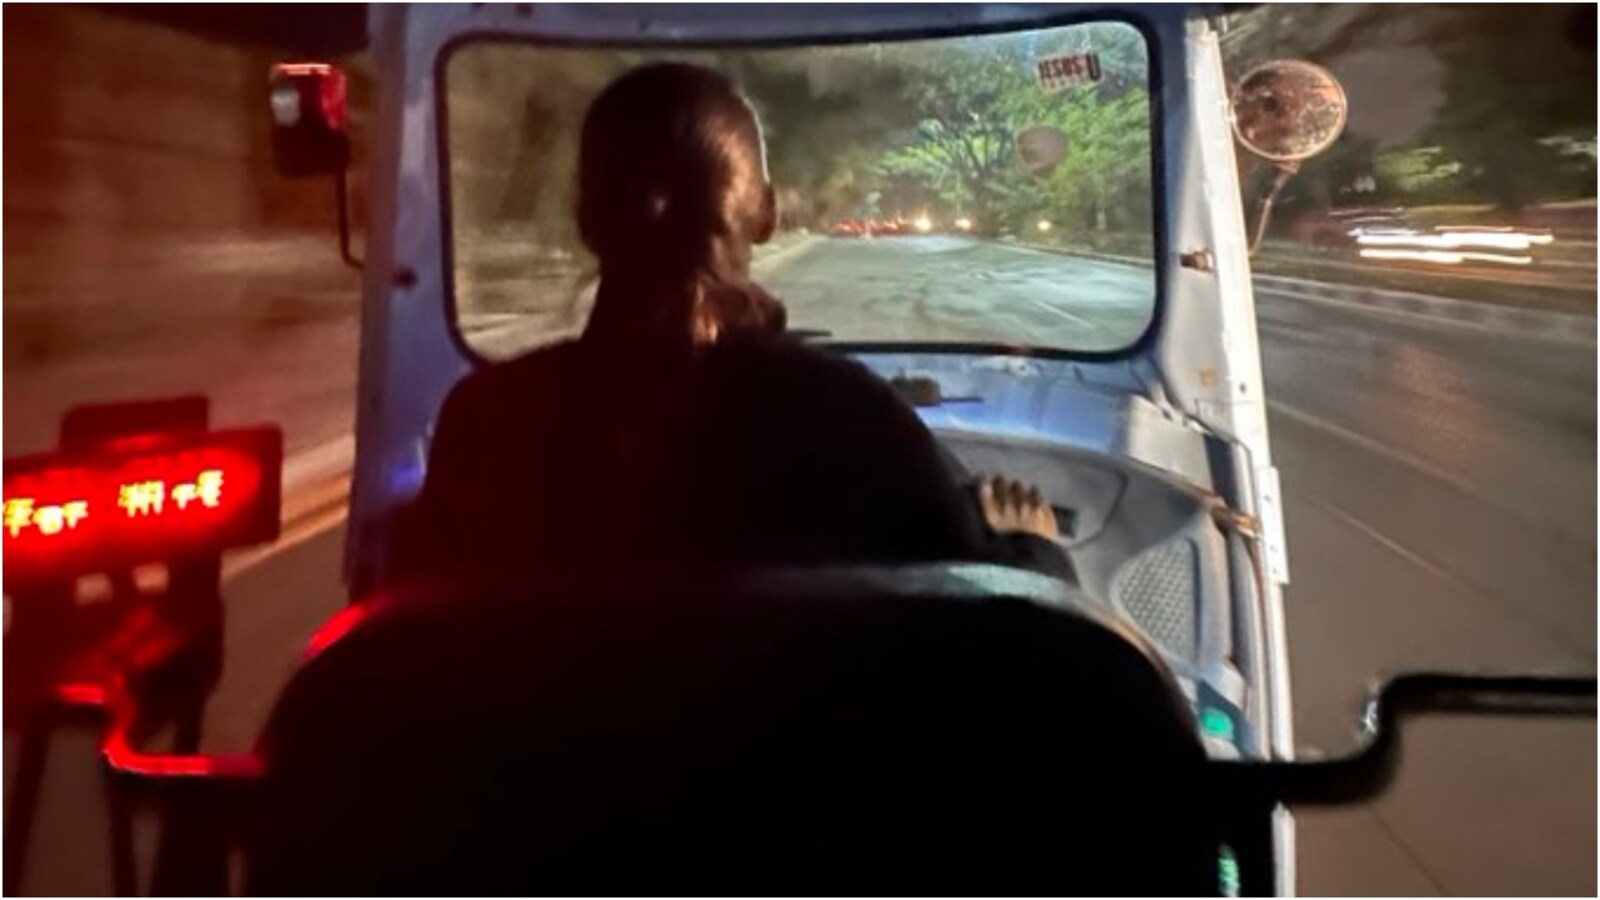 Woman receives 1 Euro coin from rickshaw driver instead of Rs 5, netizens  call it 'vishwaguru moment